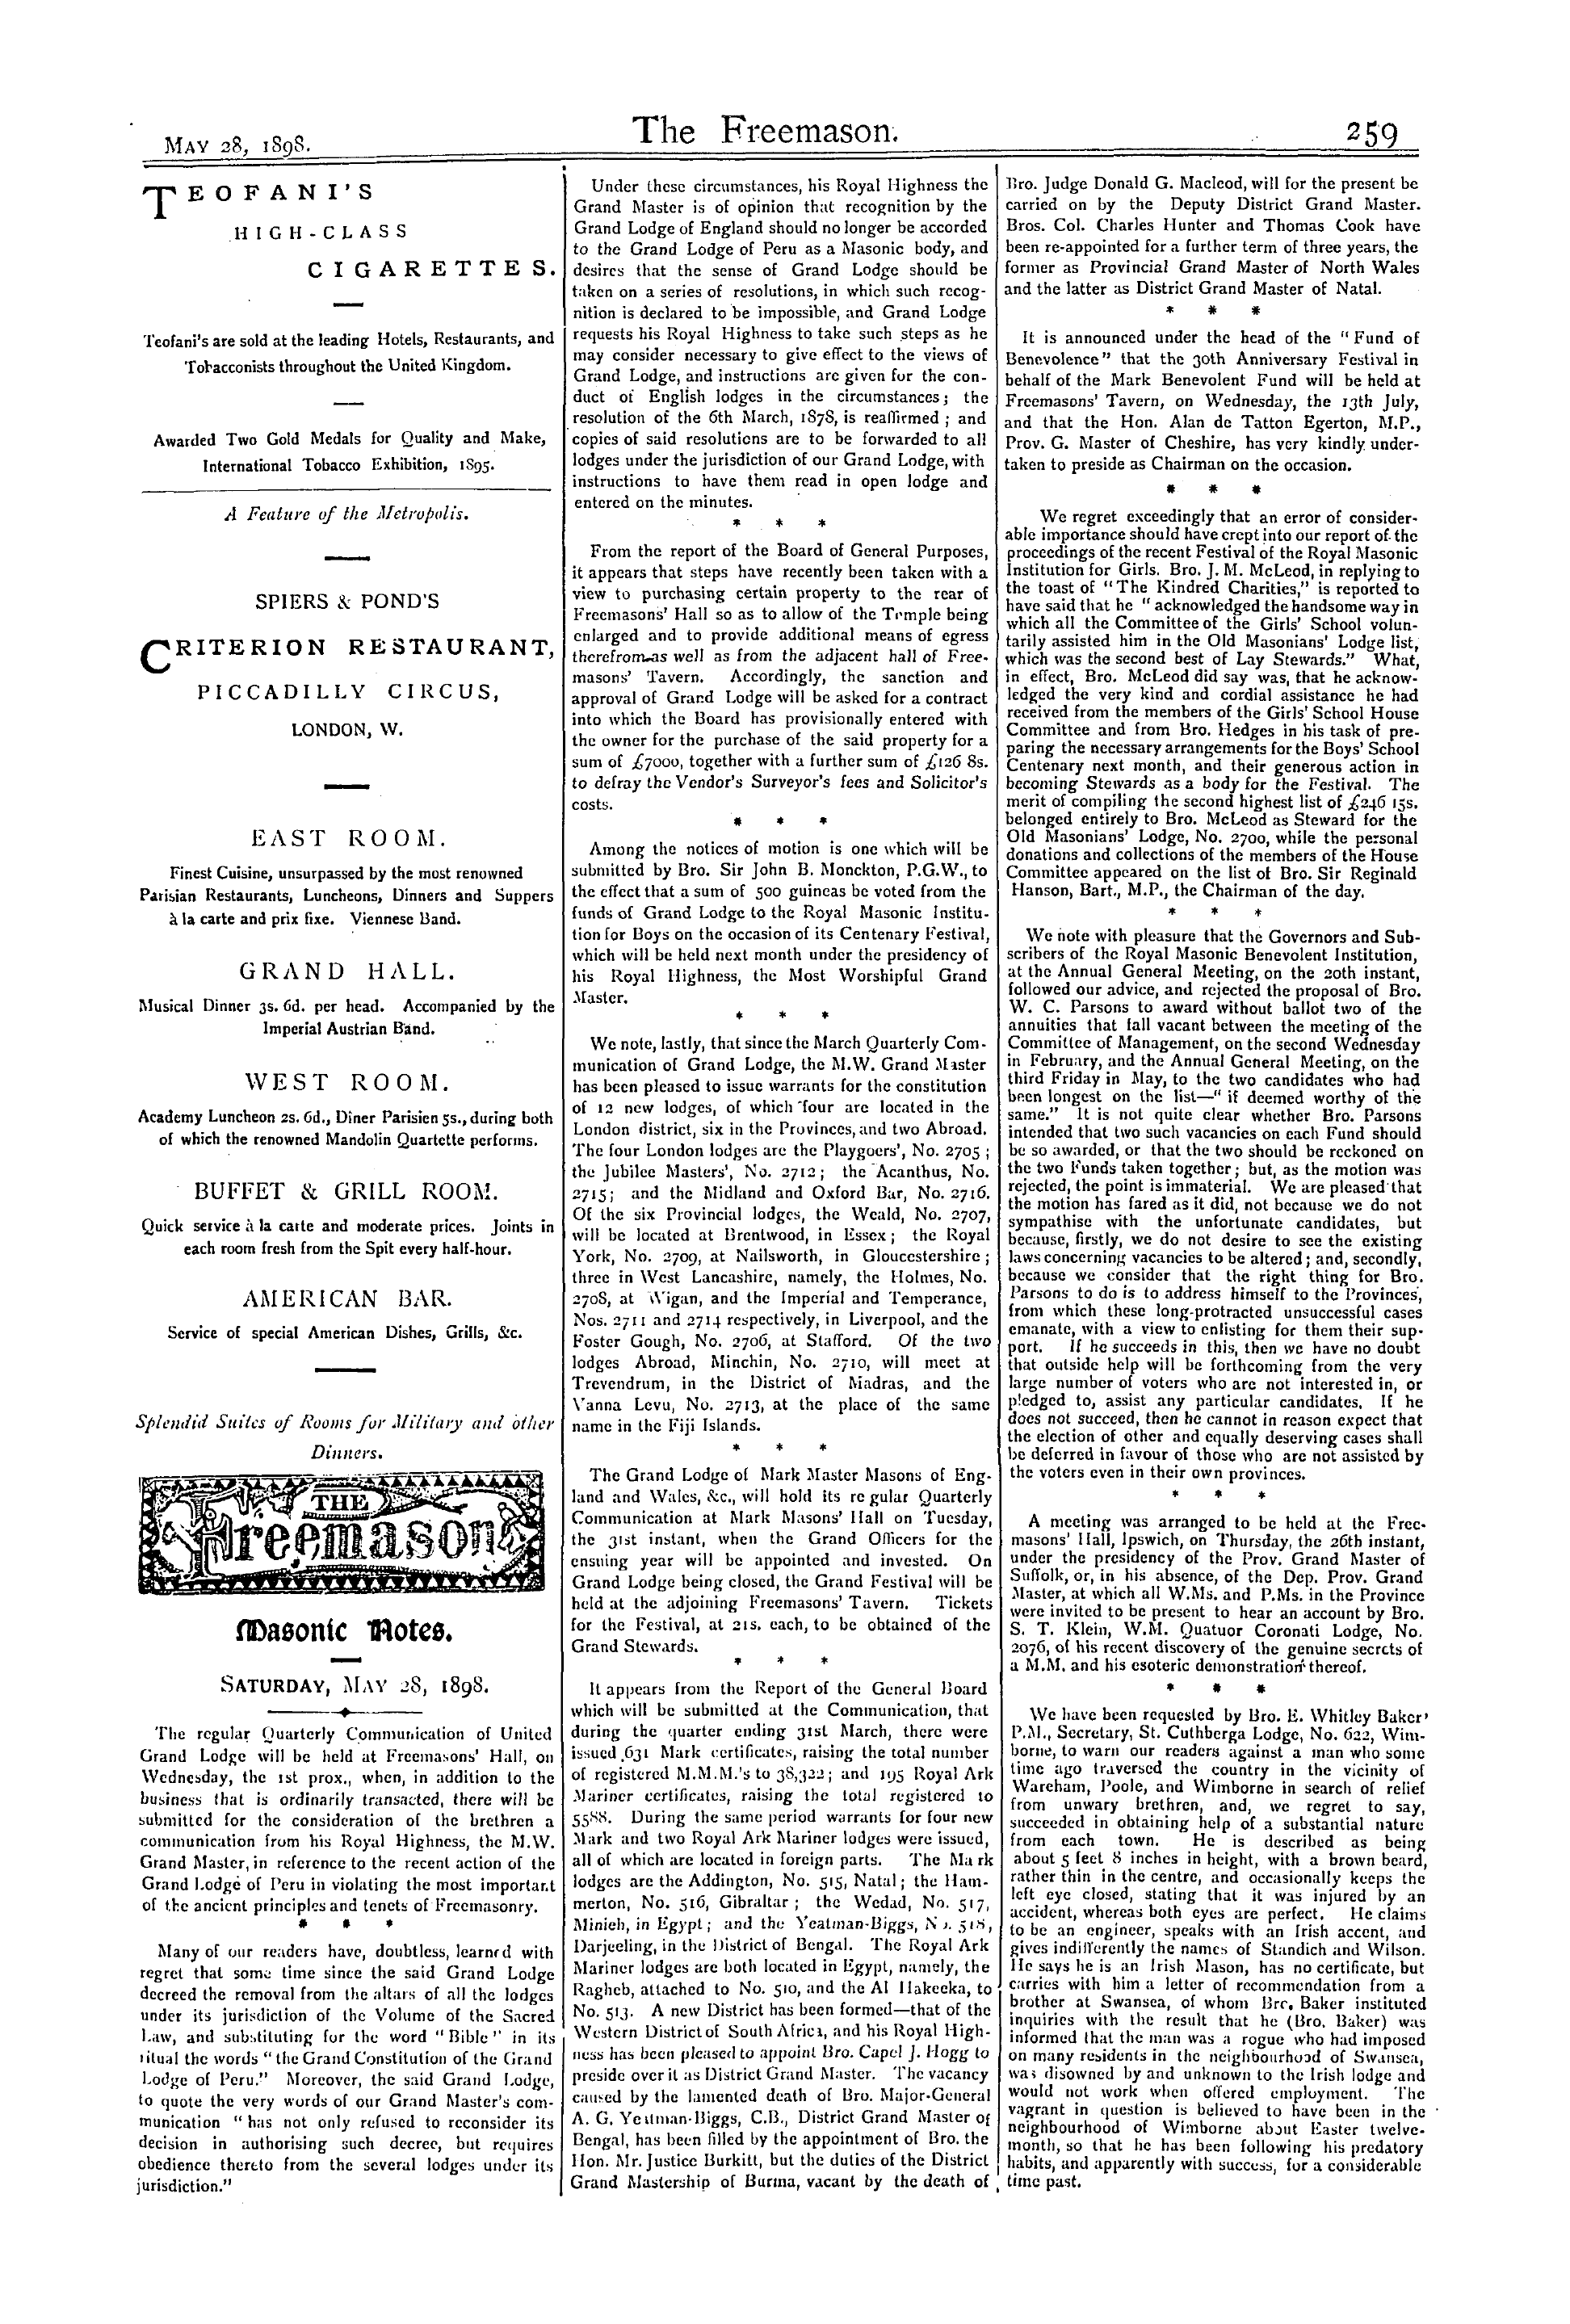 The Freemason: 1898-05-28: 7